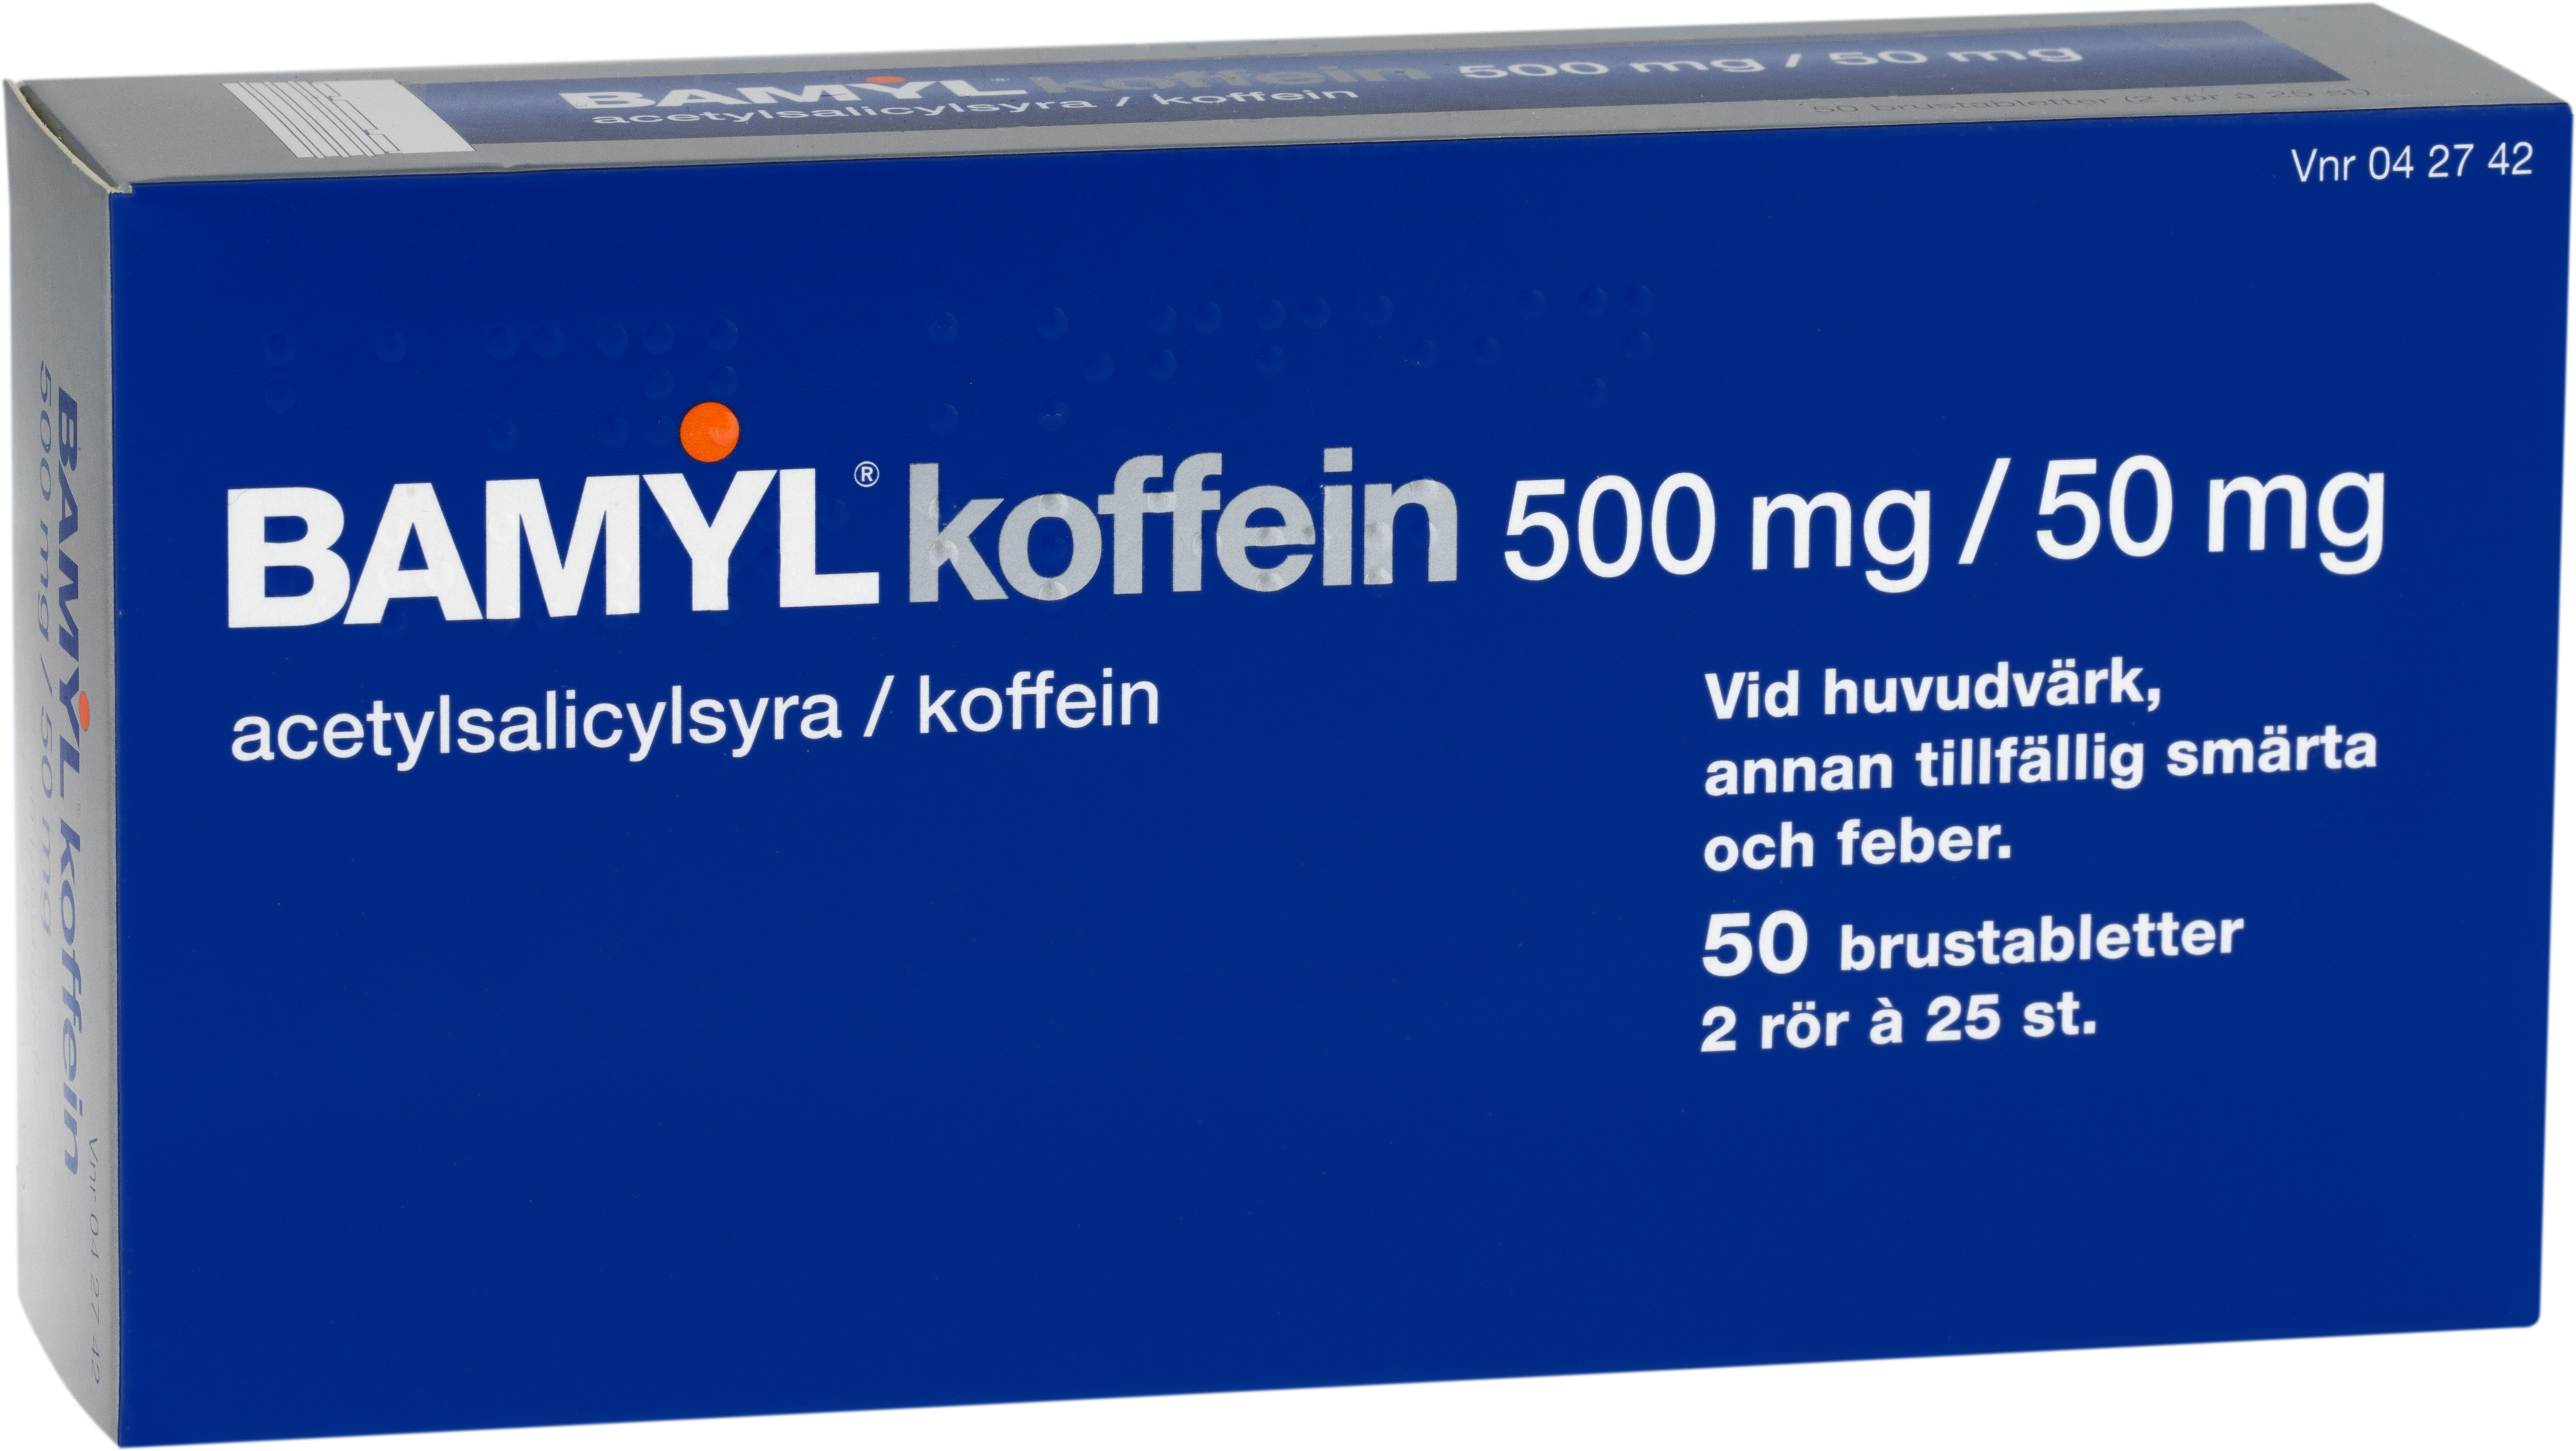 Bamyl Koffein brustablett 500 mg/50 mg, 2x25st